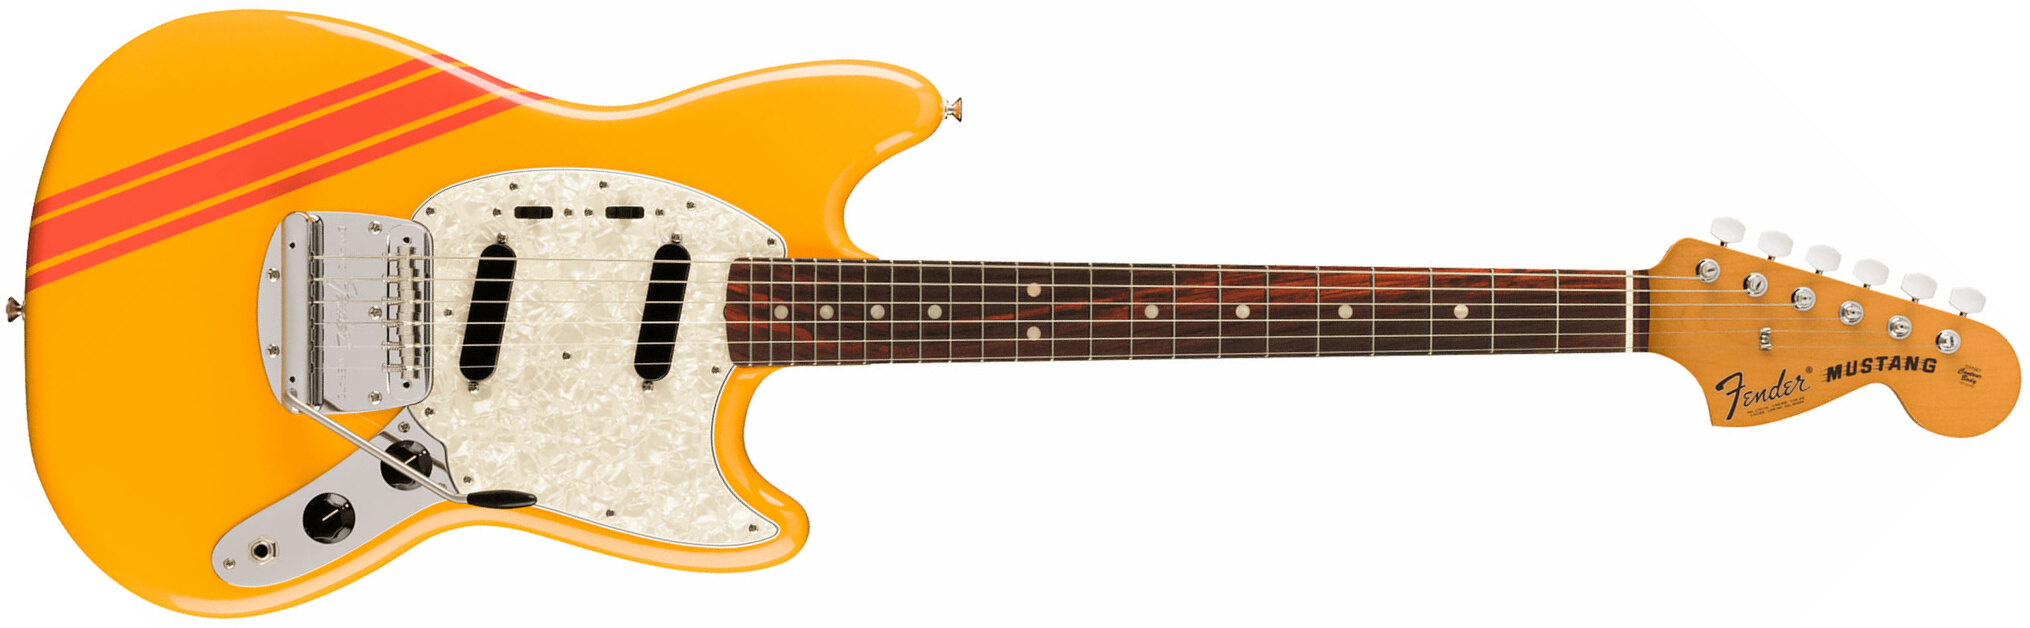 Fender Mustang 70s Competition Vintera 2 Mex 2s Trem Rw - Competition Orange - Guitarra electrica retro rock - Main picture